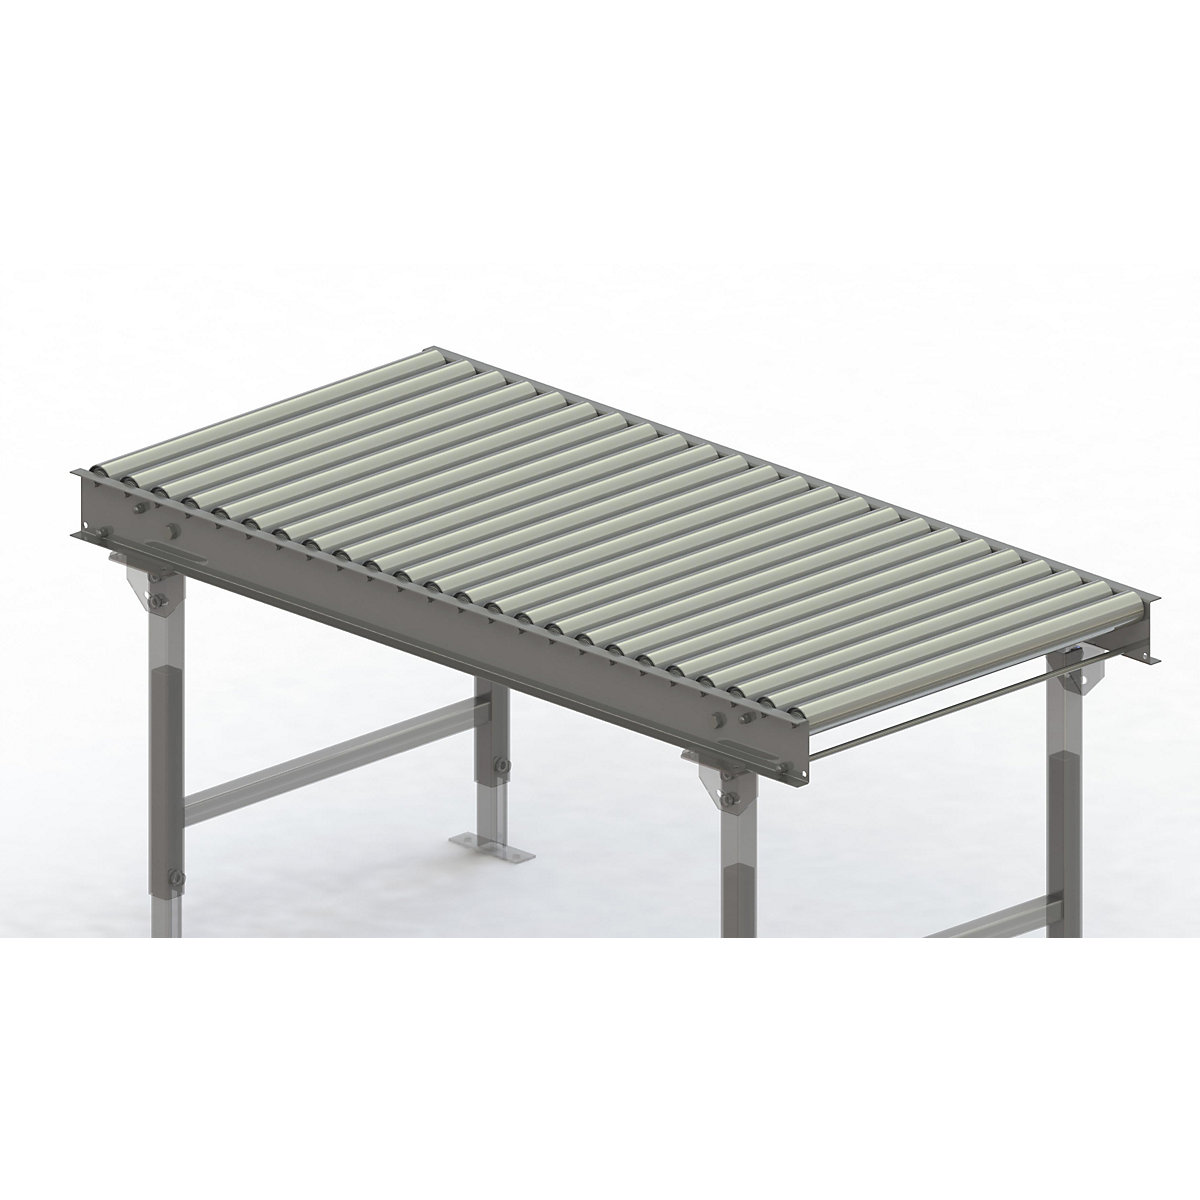 Gura – Roller conveyor, steel frame with zinc plated steel rollers, track width 750 mm, distance between axles 62.5 mm, length 1.5 m